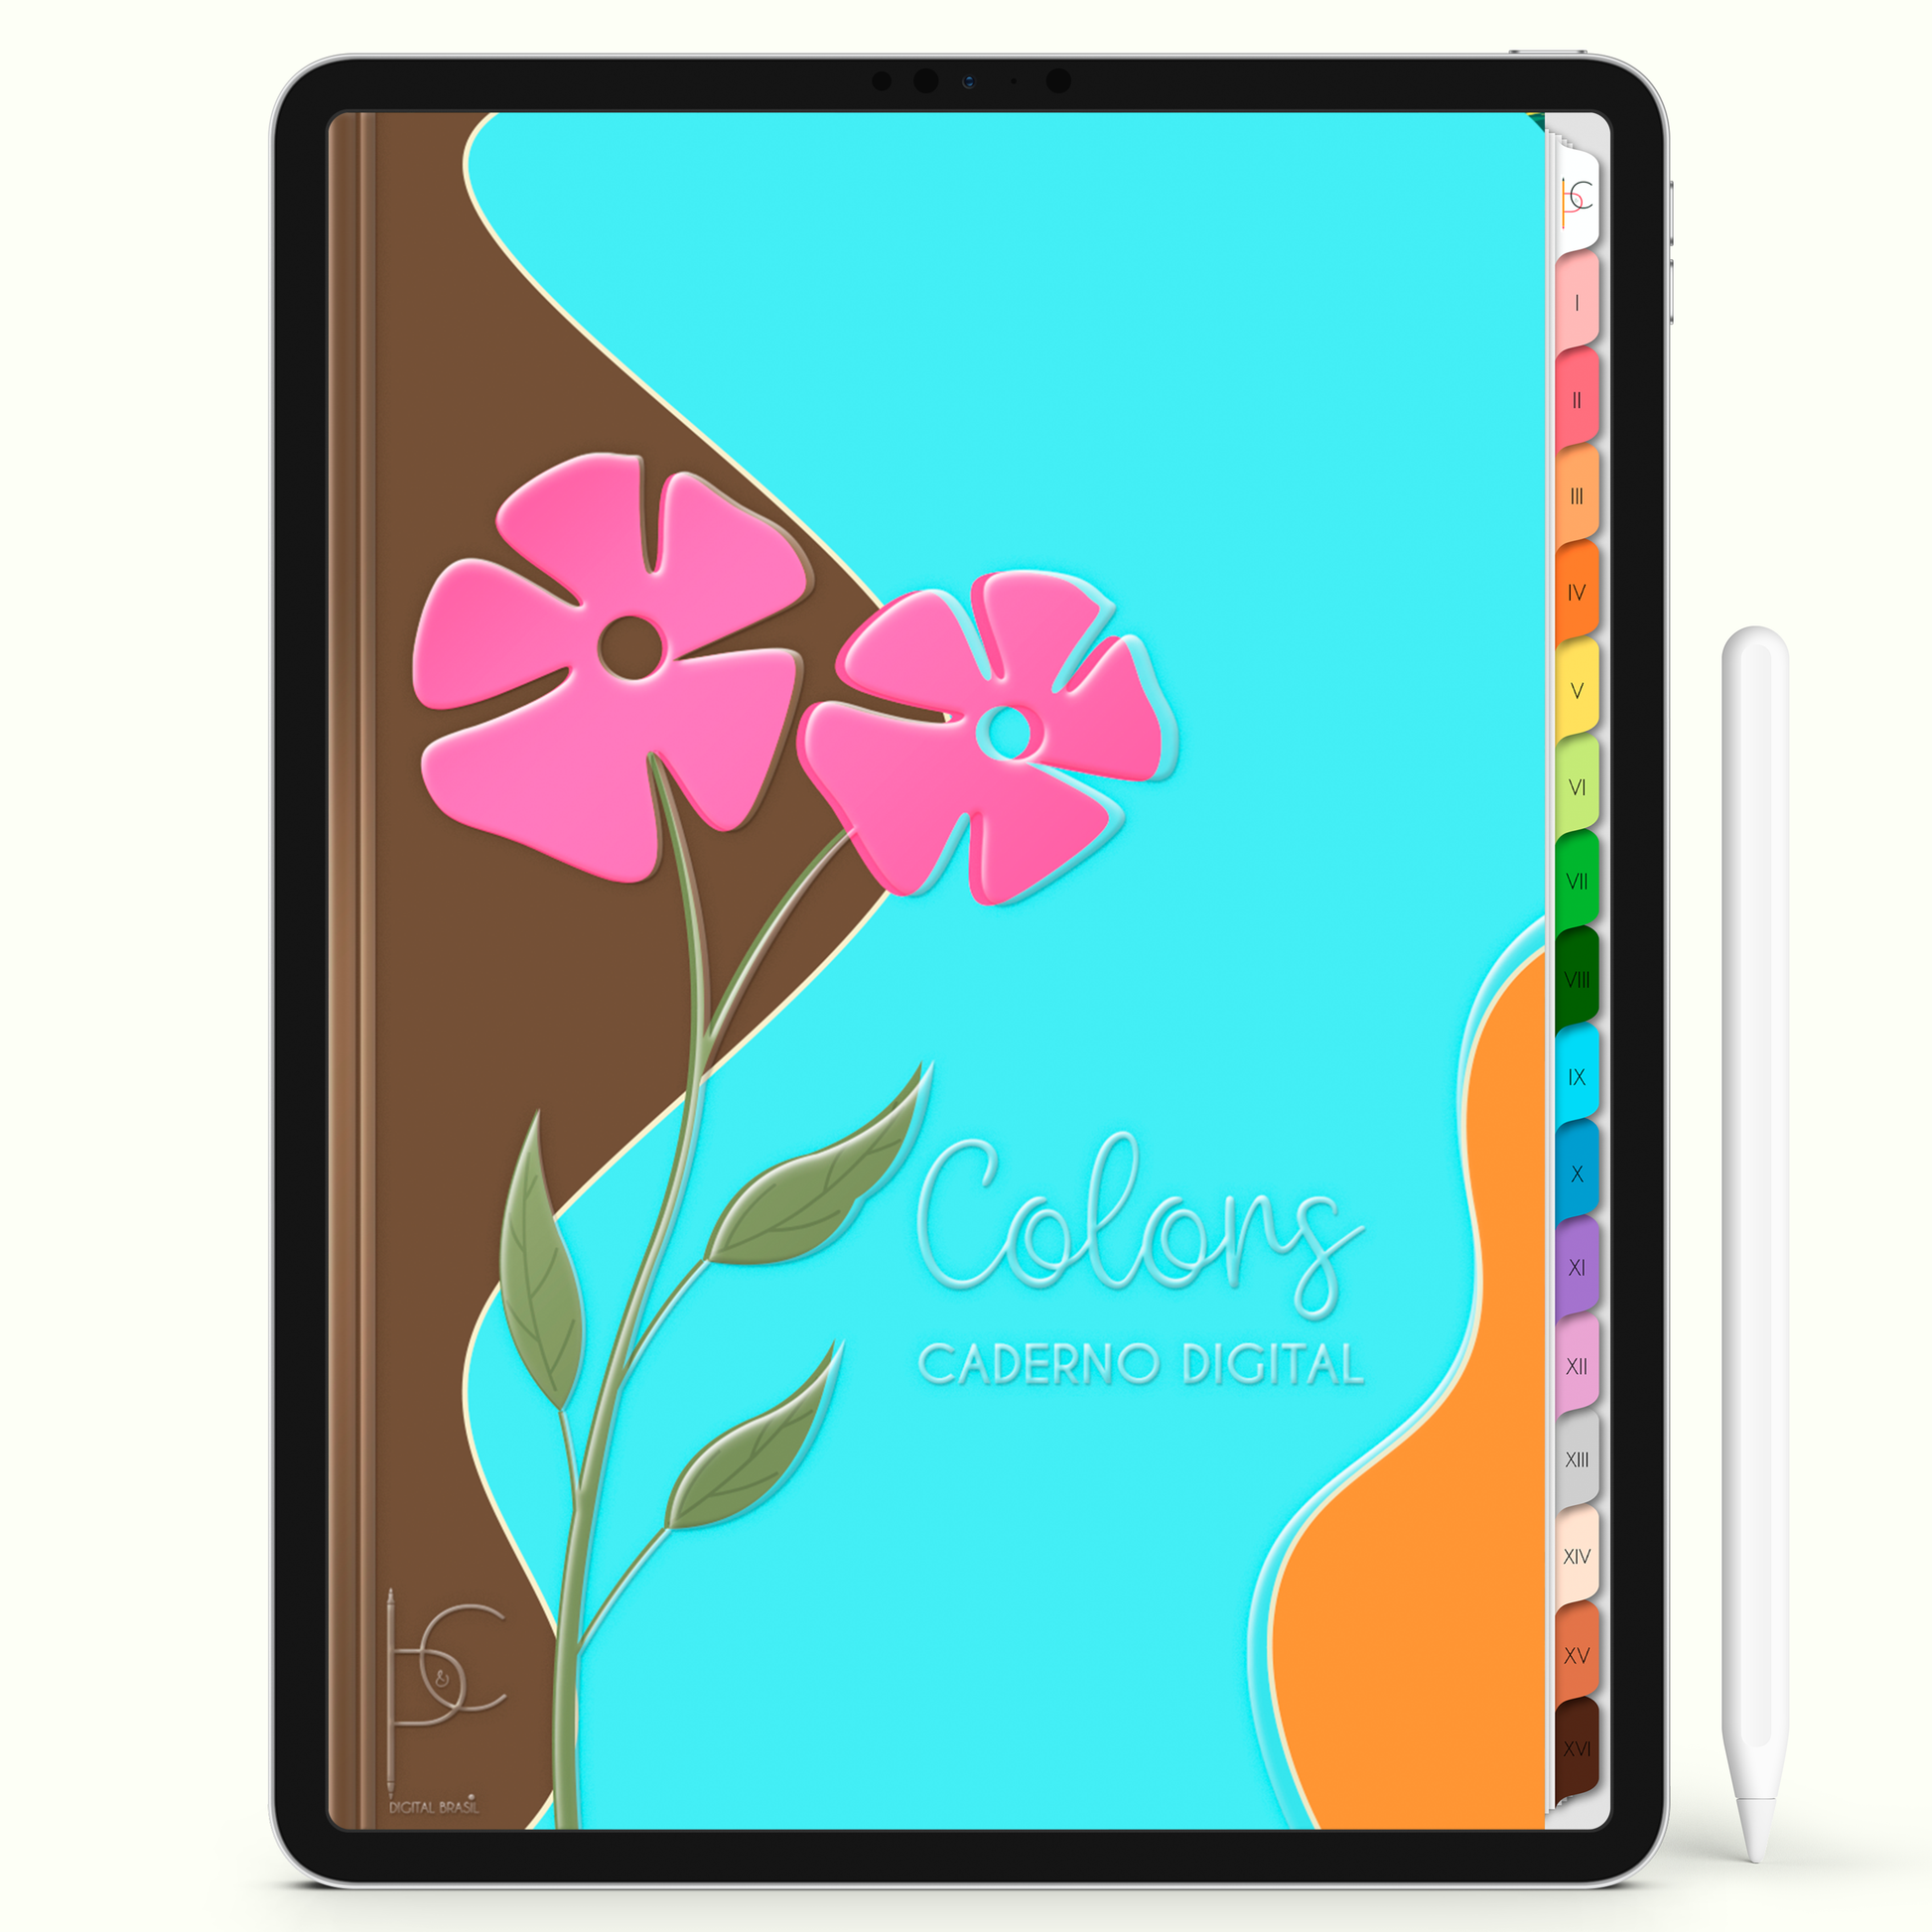 Caderno Digital Colors Delicacy 16 Matérias • Para iPad e Tablet Android • Download instantâneo • Sustentável